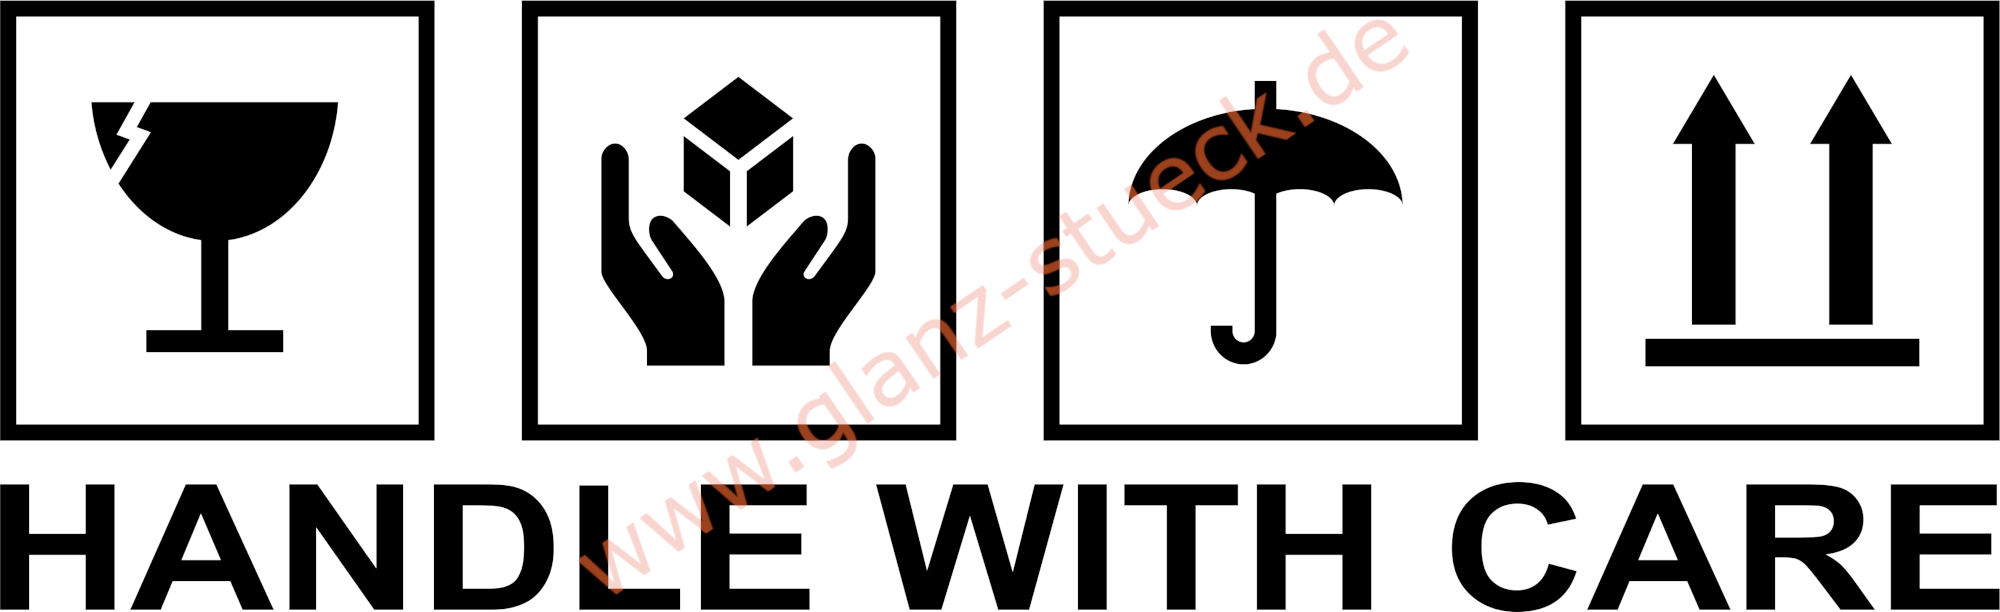 Handle With Care Schriftzug Symbol Aufkleber Glanzstuck Shop